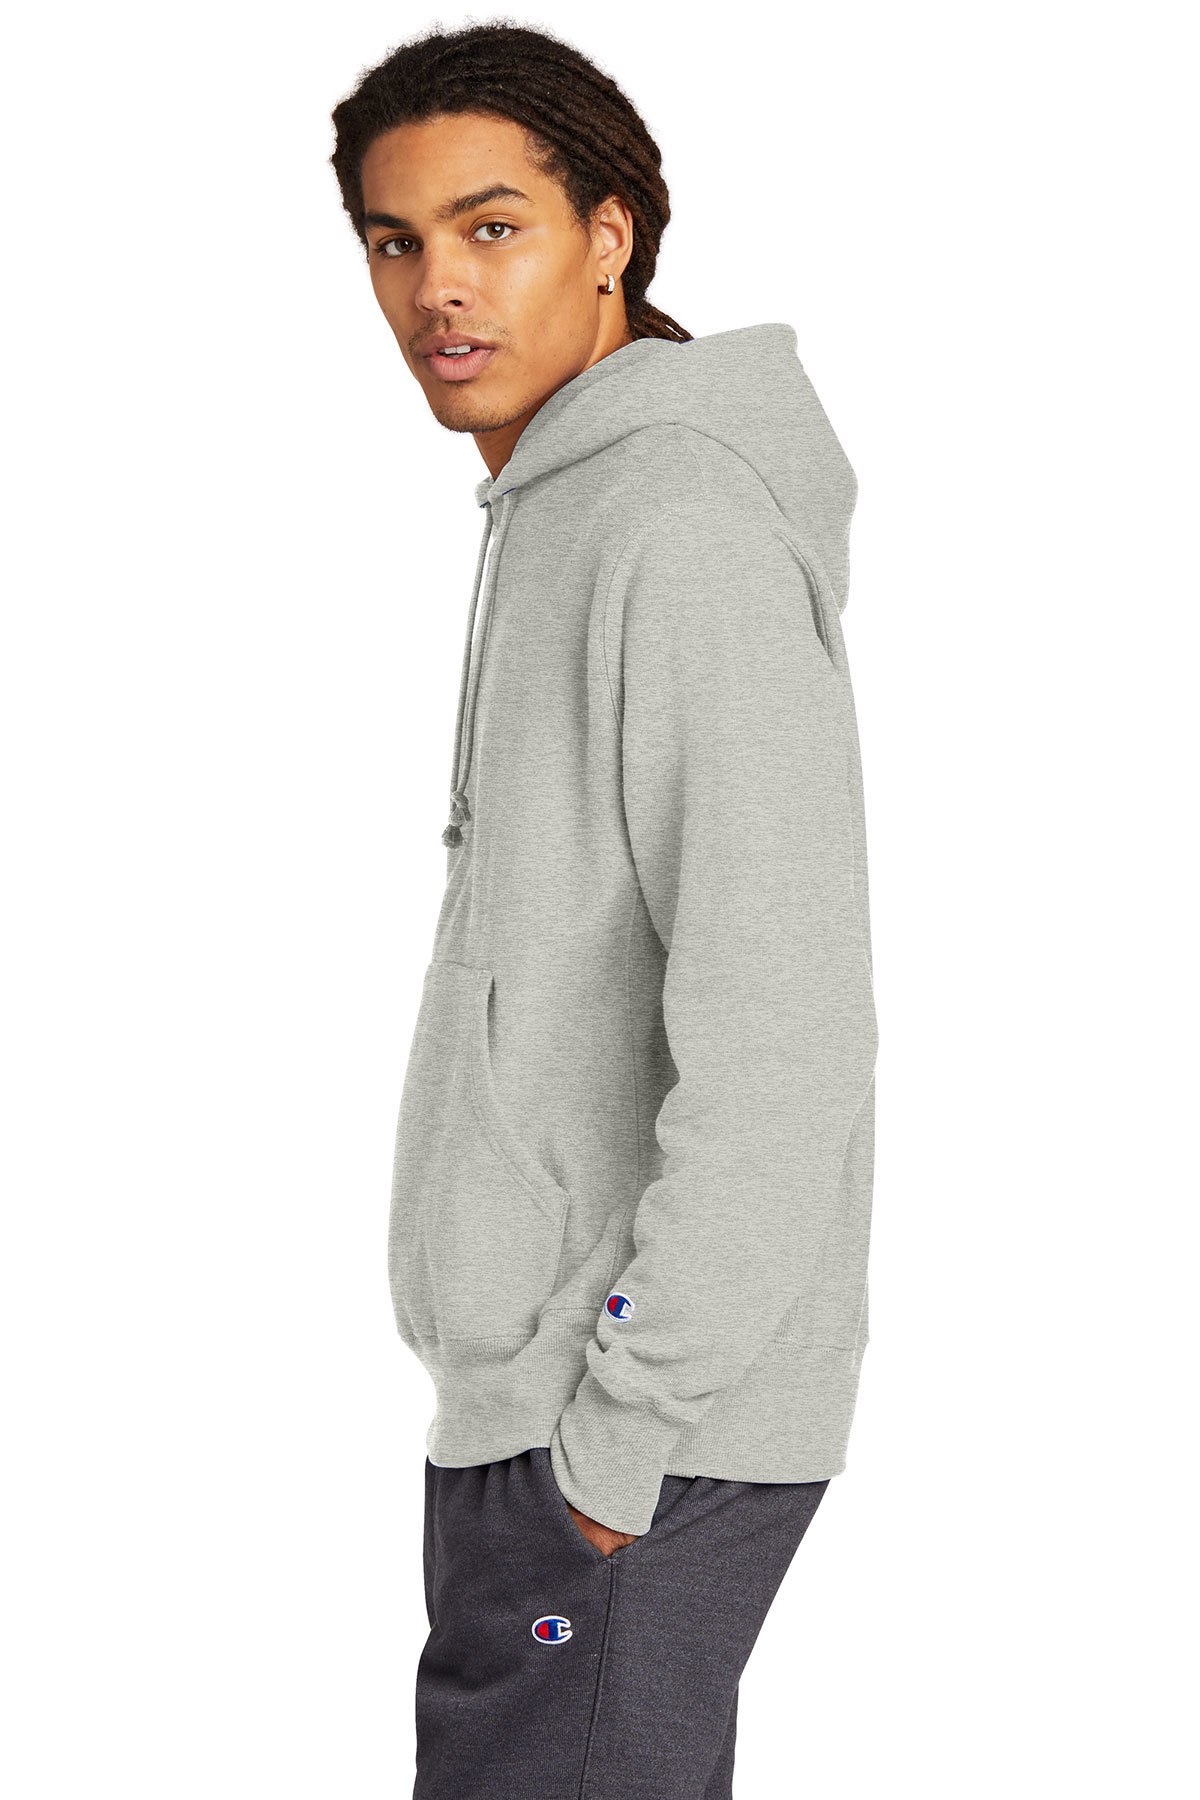 | SanMar Sweatshirt Champion Hooded | Product Reverse Weave